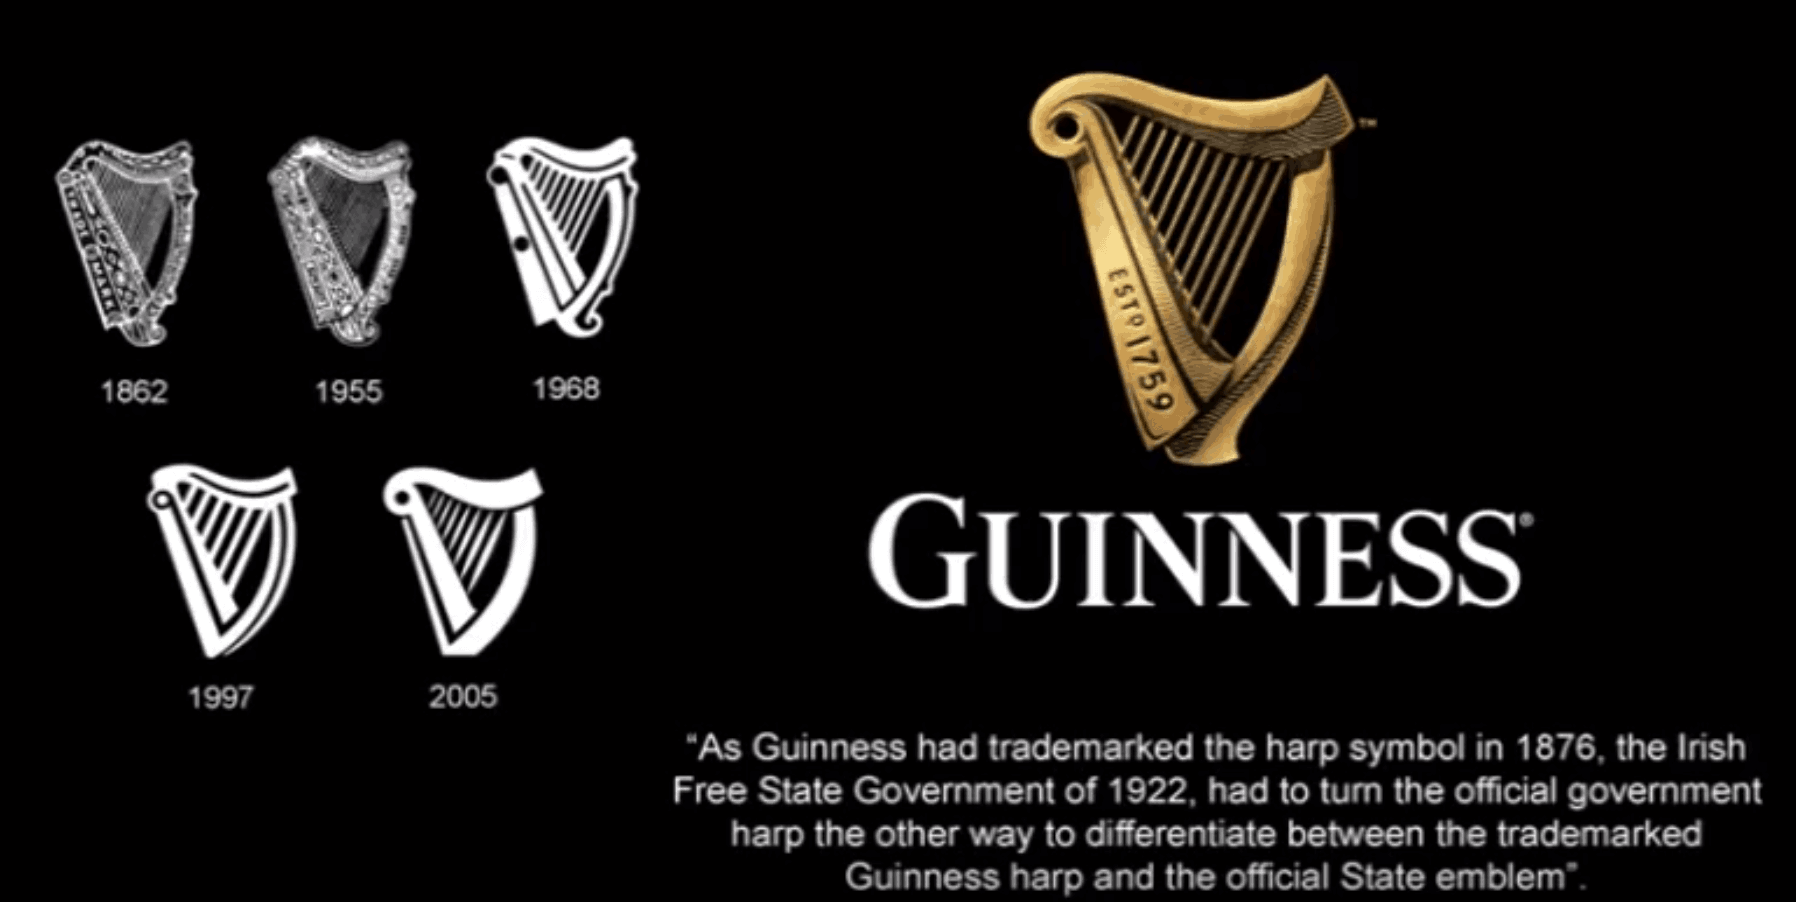 Guinness evoloution of the Irish harp.